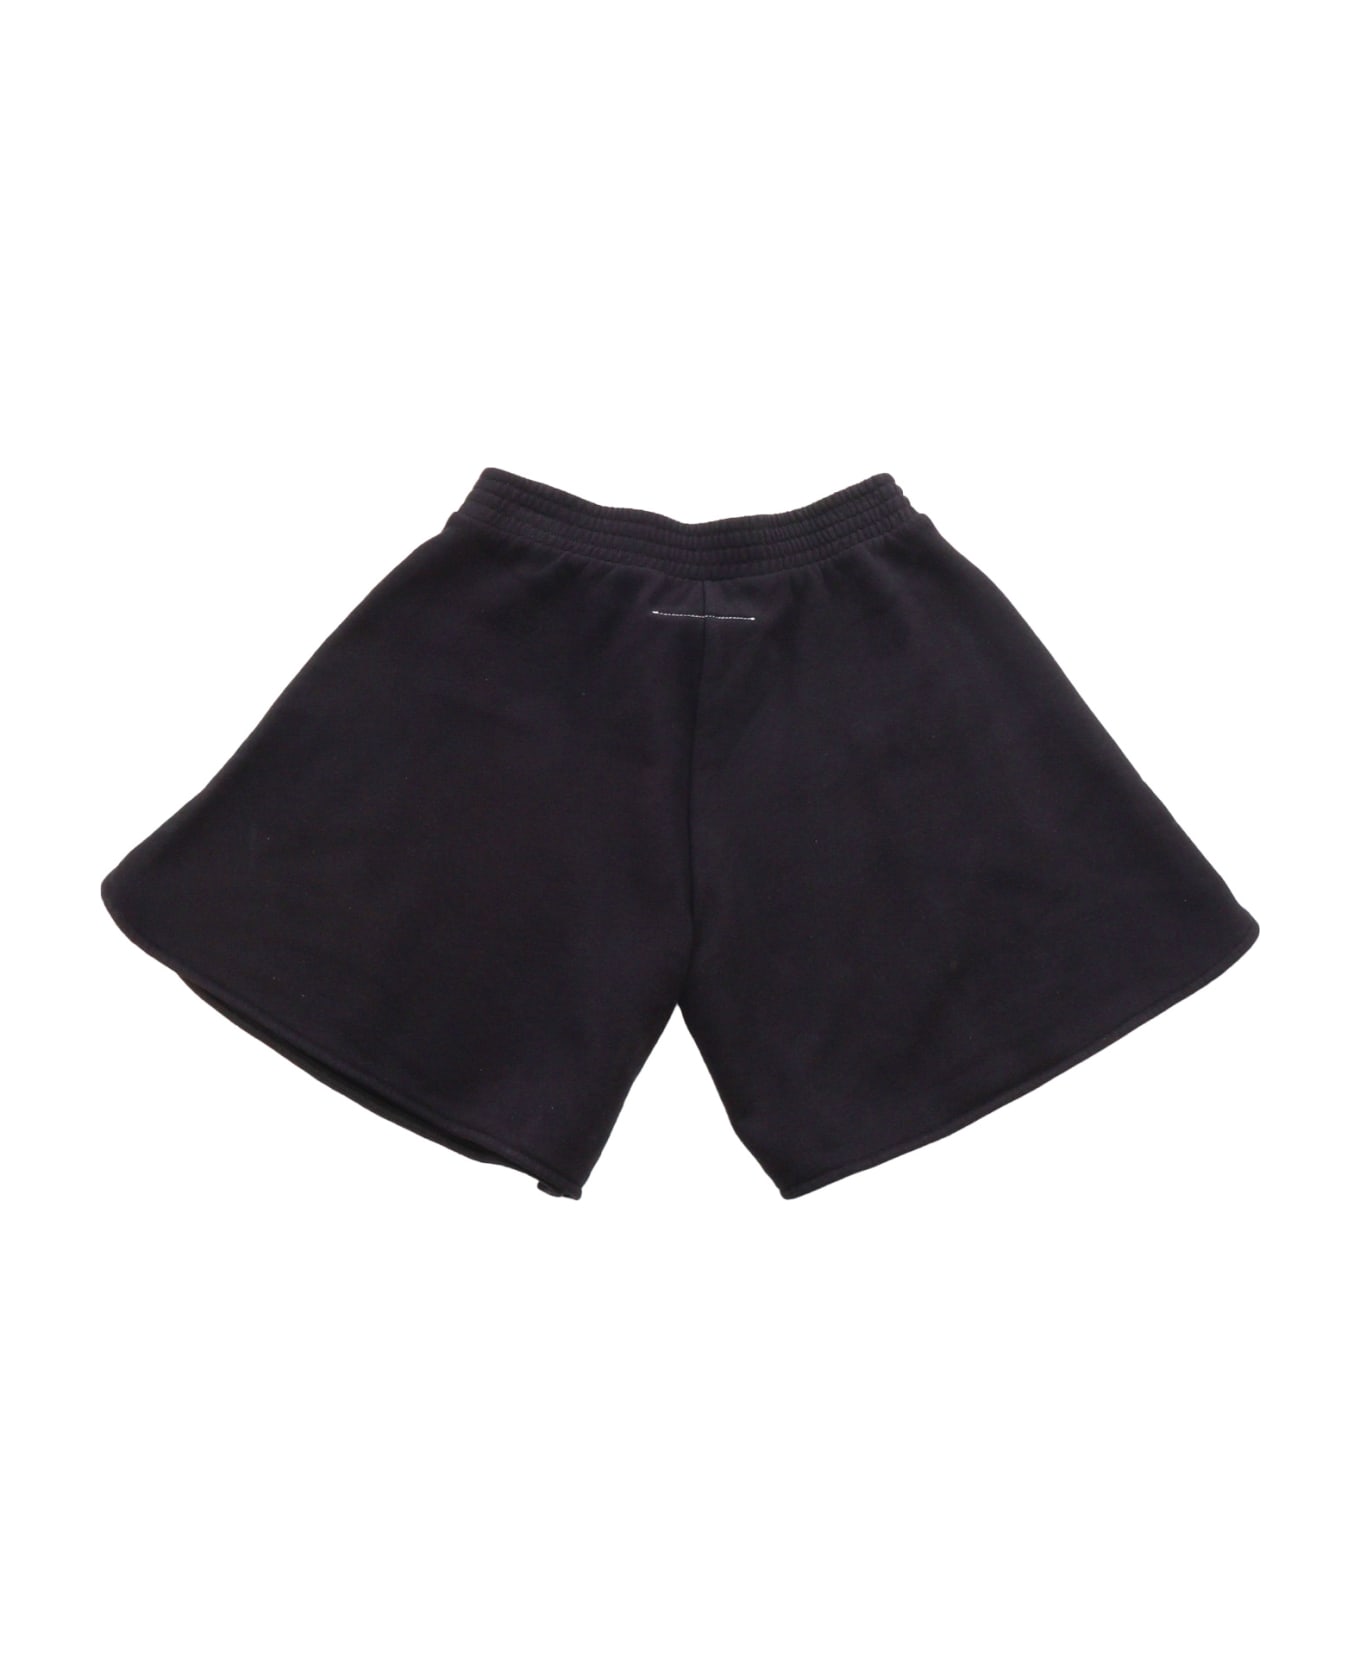 MM6 Maison Margiela Black Sweatshirt Pants - BLACK ボトムス